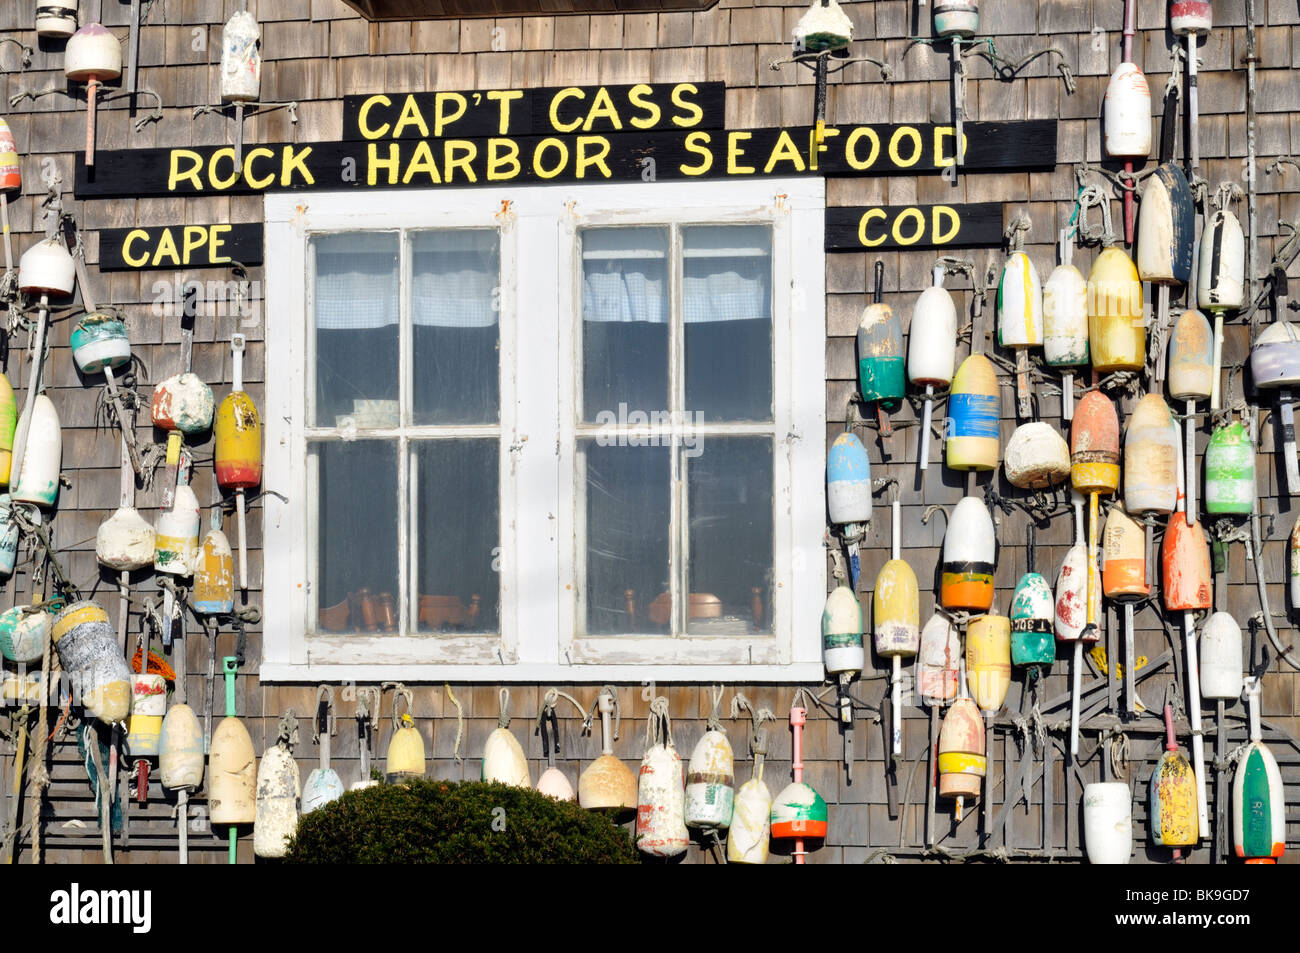 Hummer-Bojen auf Seite Cap't Cass Rock Harbor Seafood, Orleans, Cape Cod Stockfoto